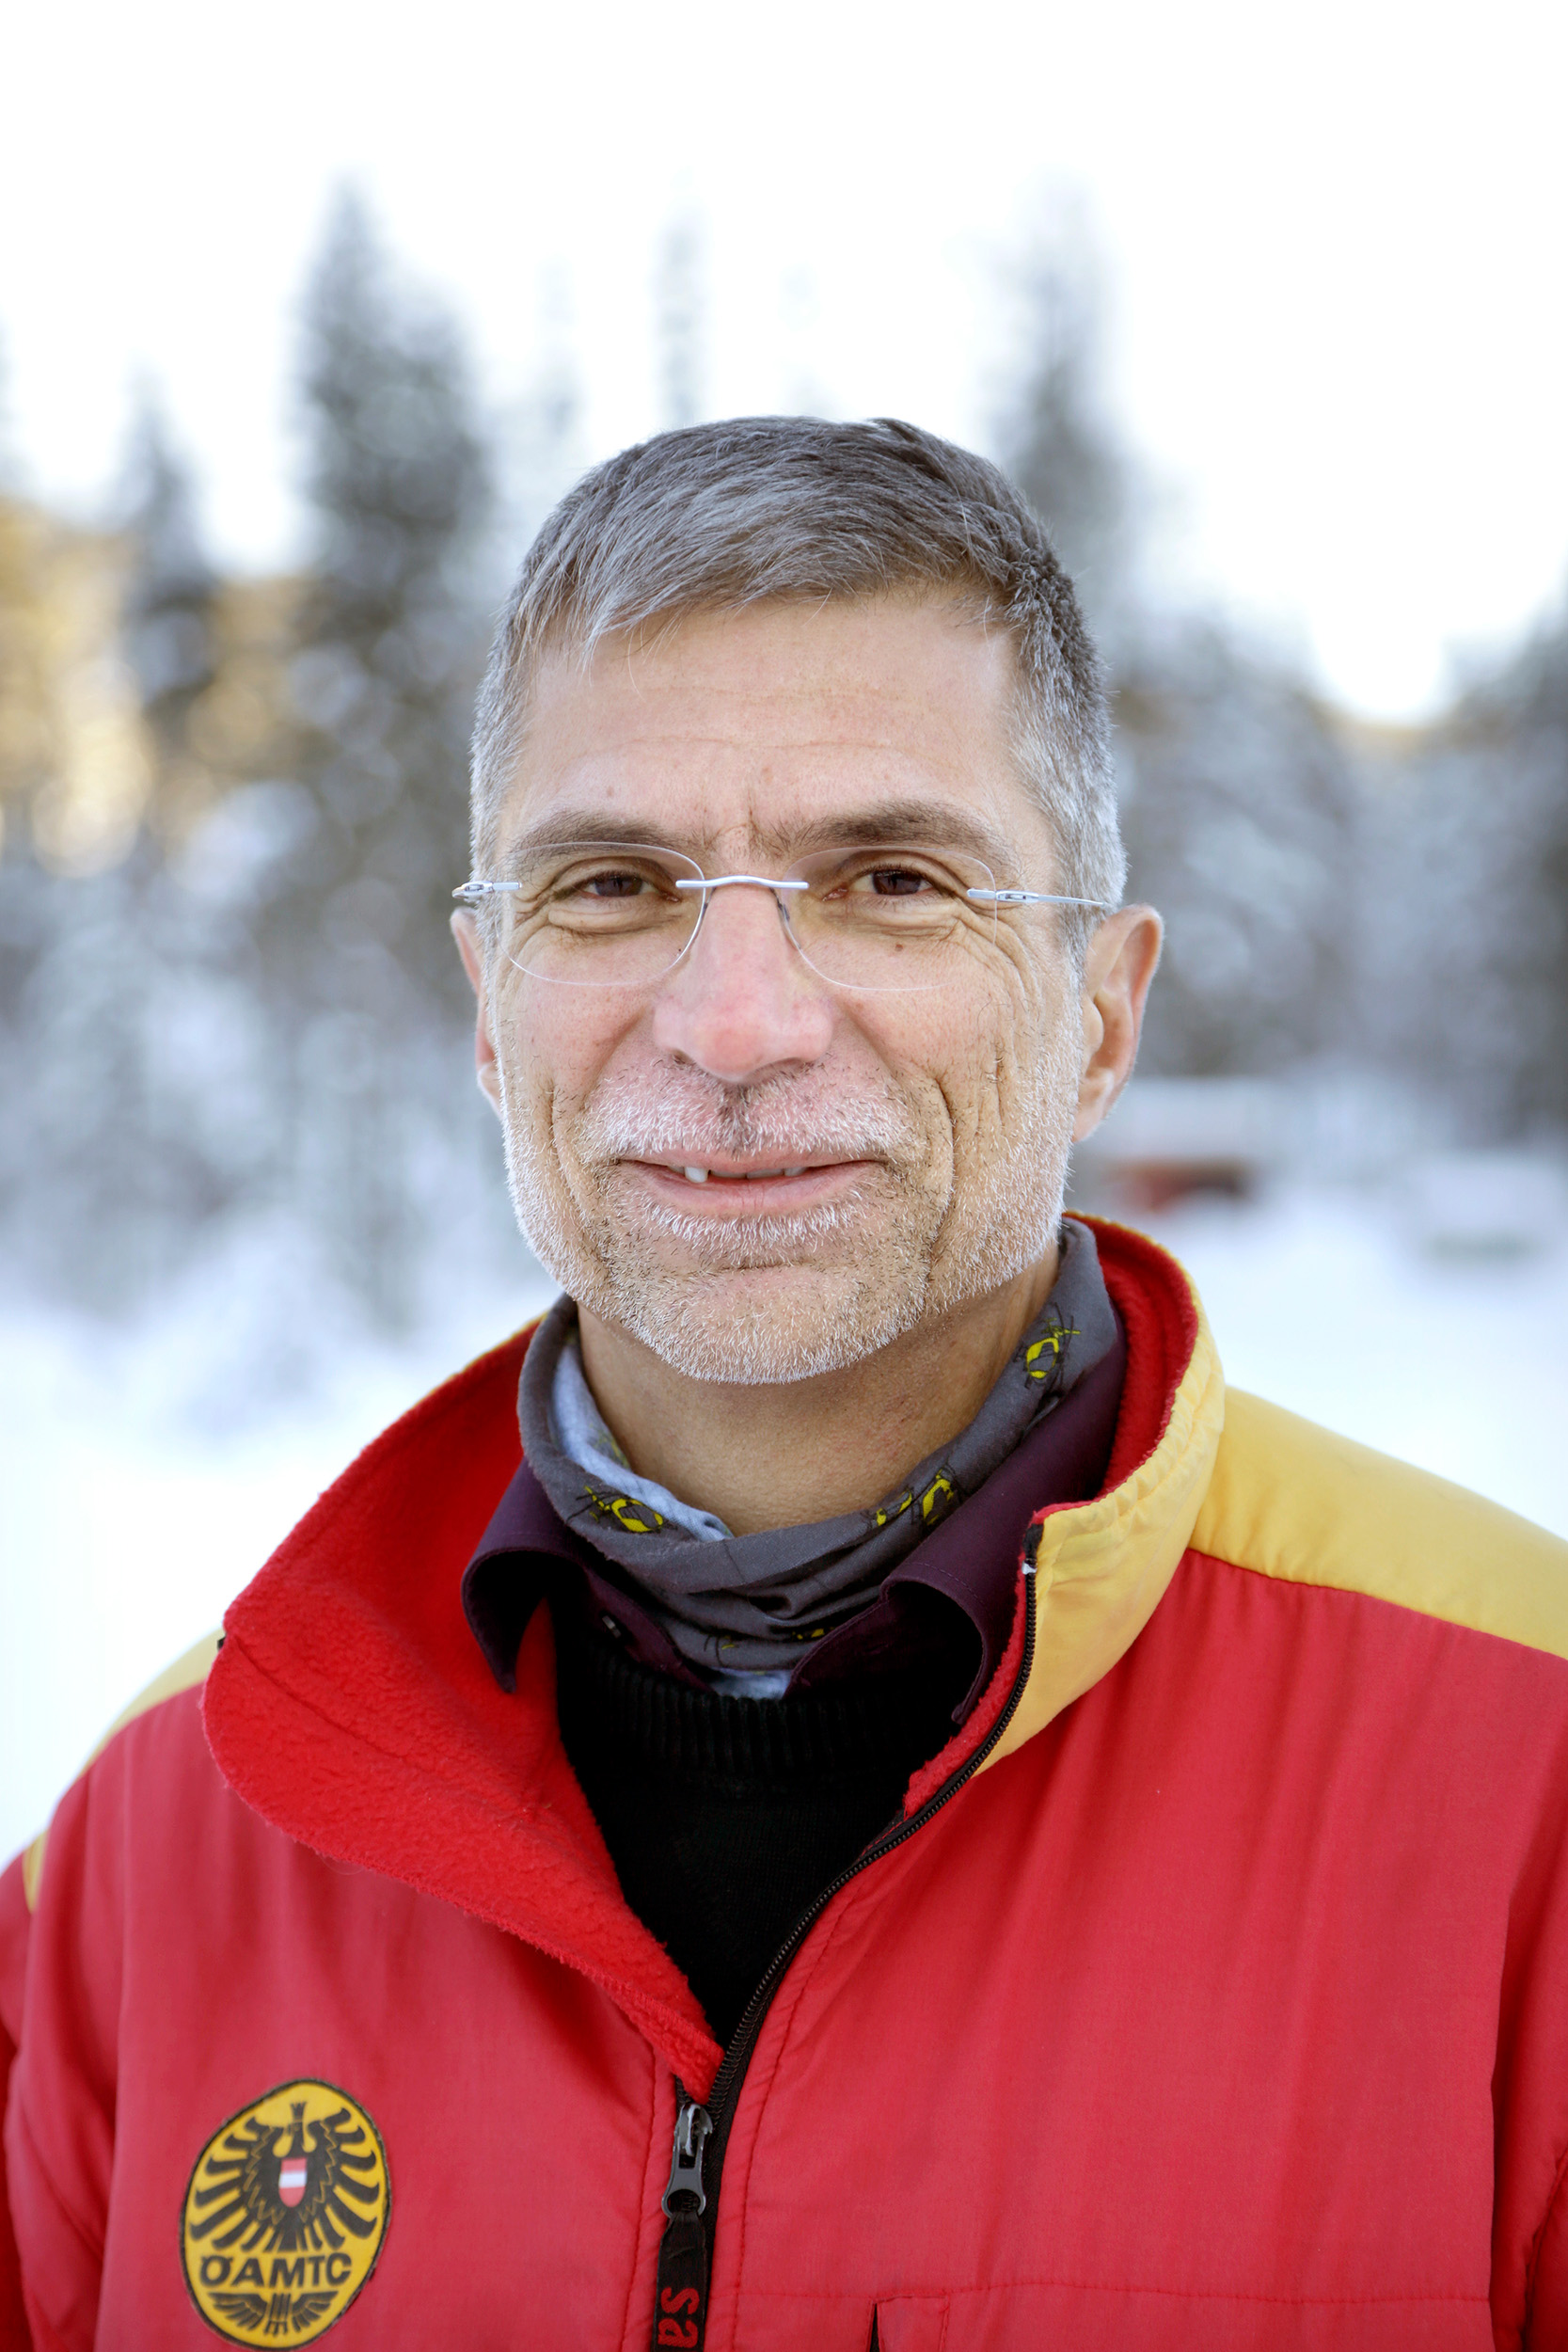 Portrett av Wolfgang Voelckel, medisinsk direktør i ÖAMTC